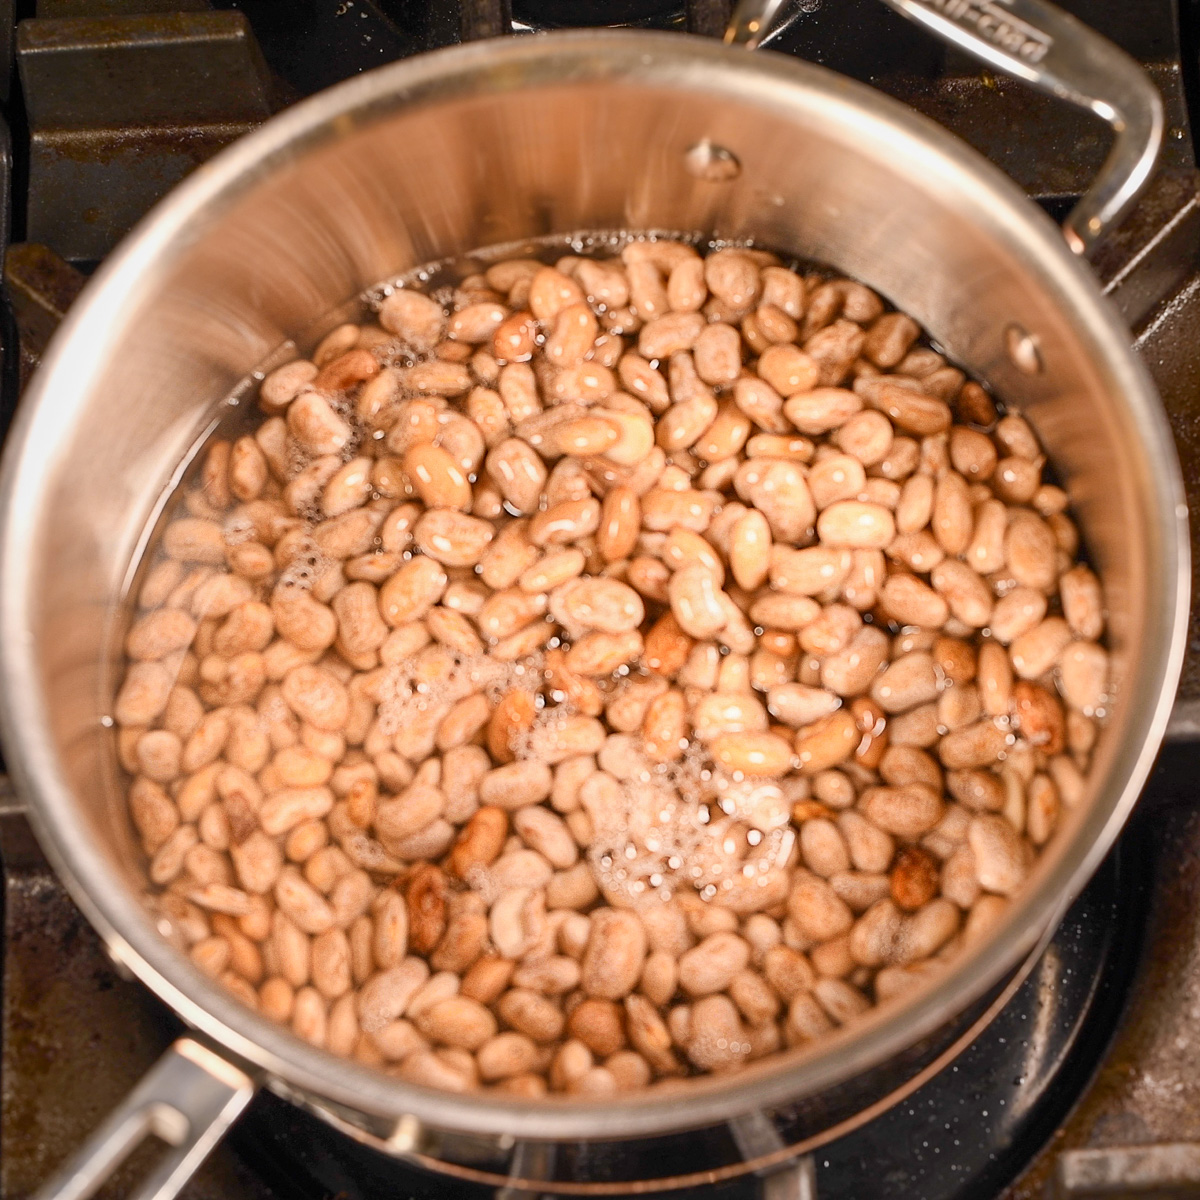 Soak the pinto beans overnight.